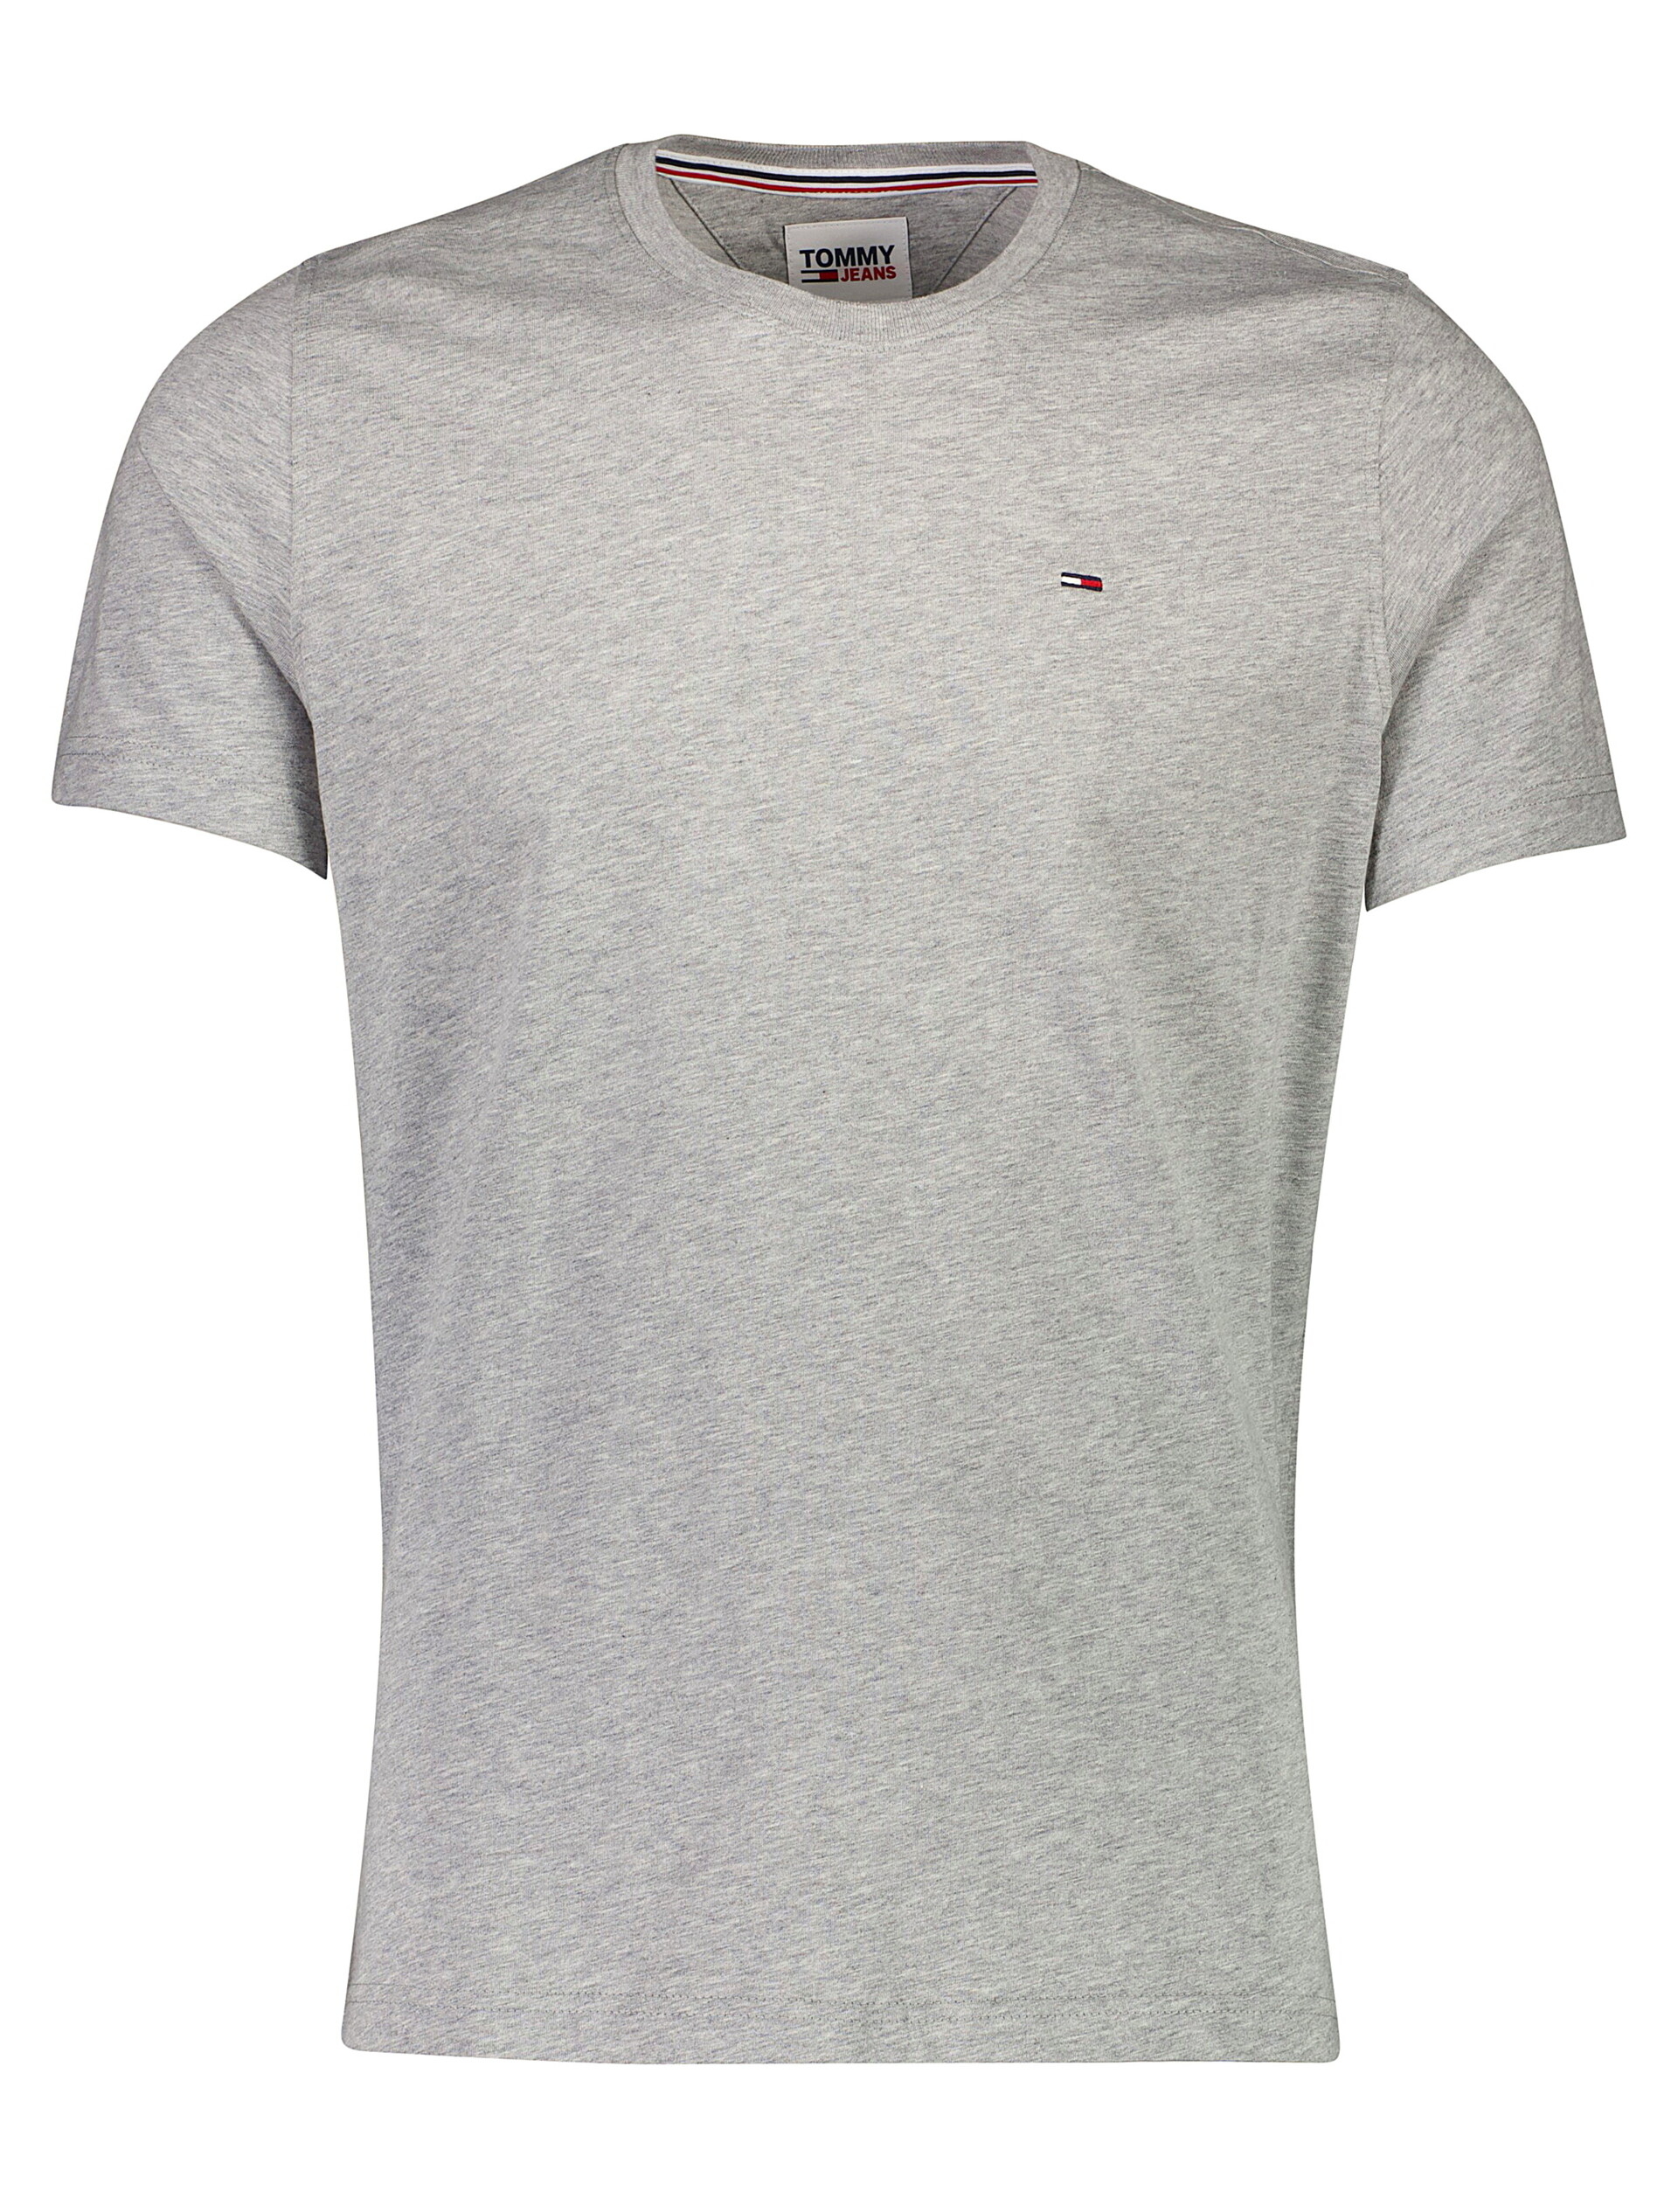 Tommy Jeans T-shirt grå / 038 grey